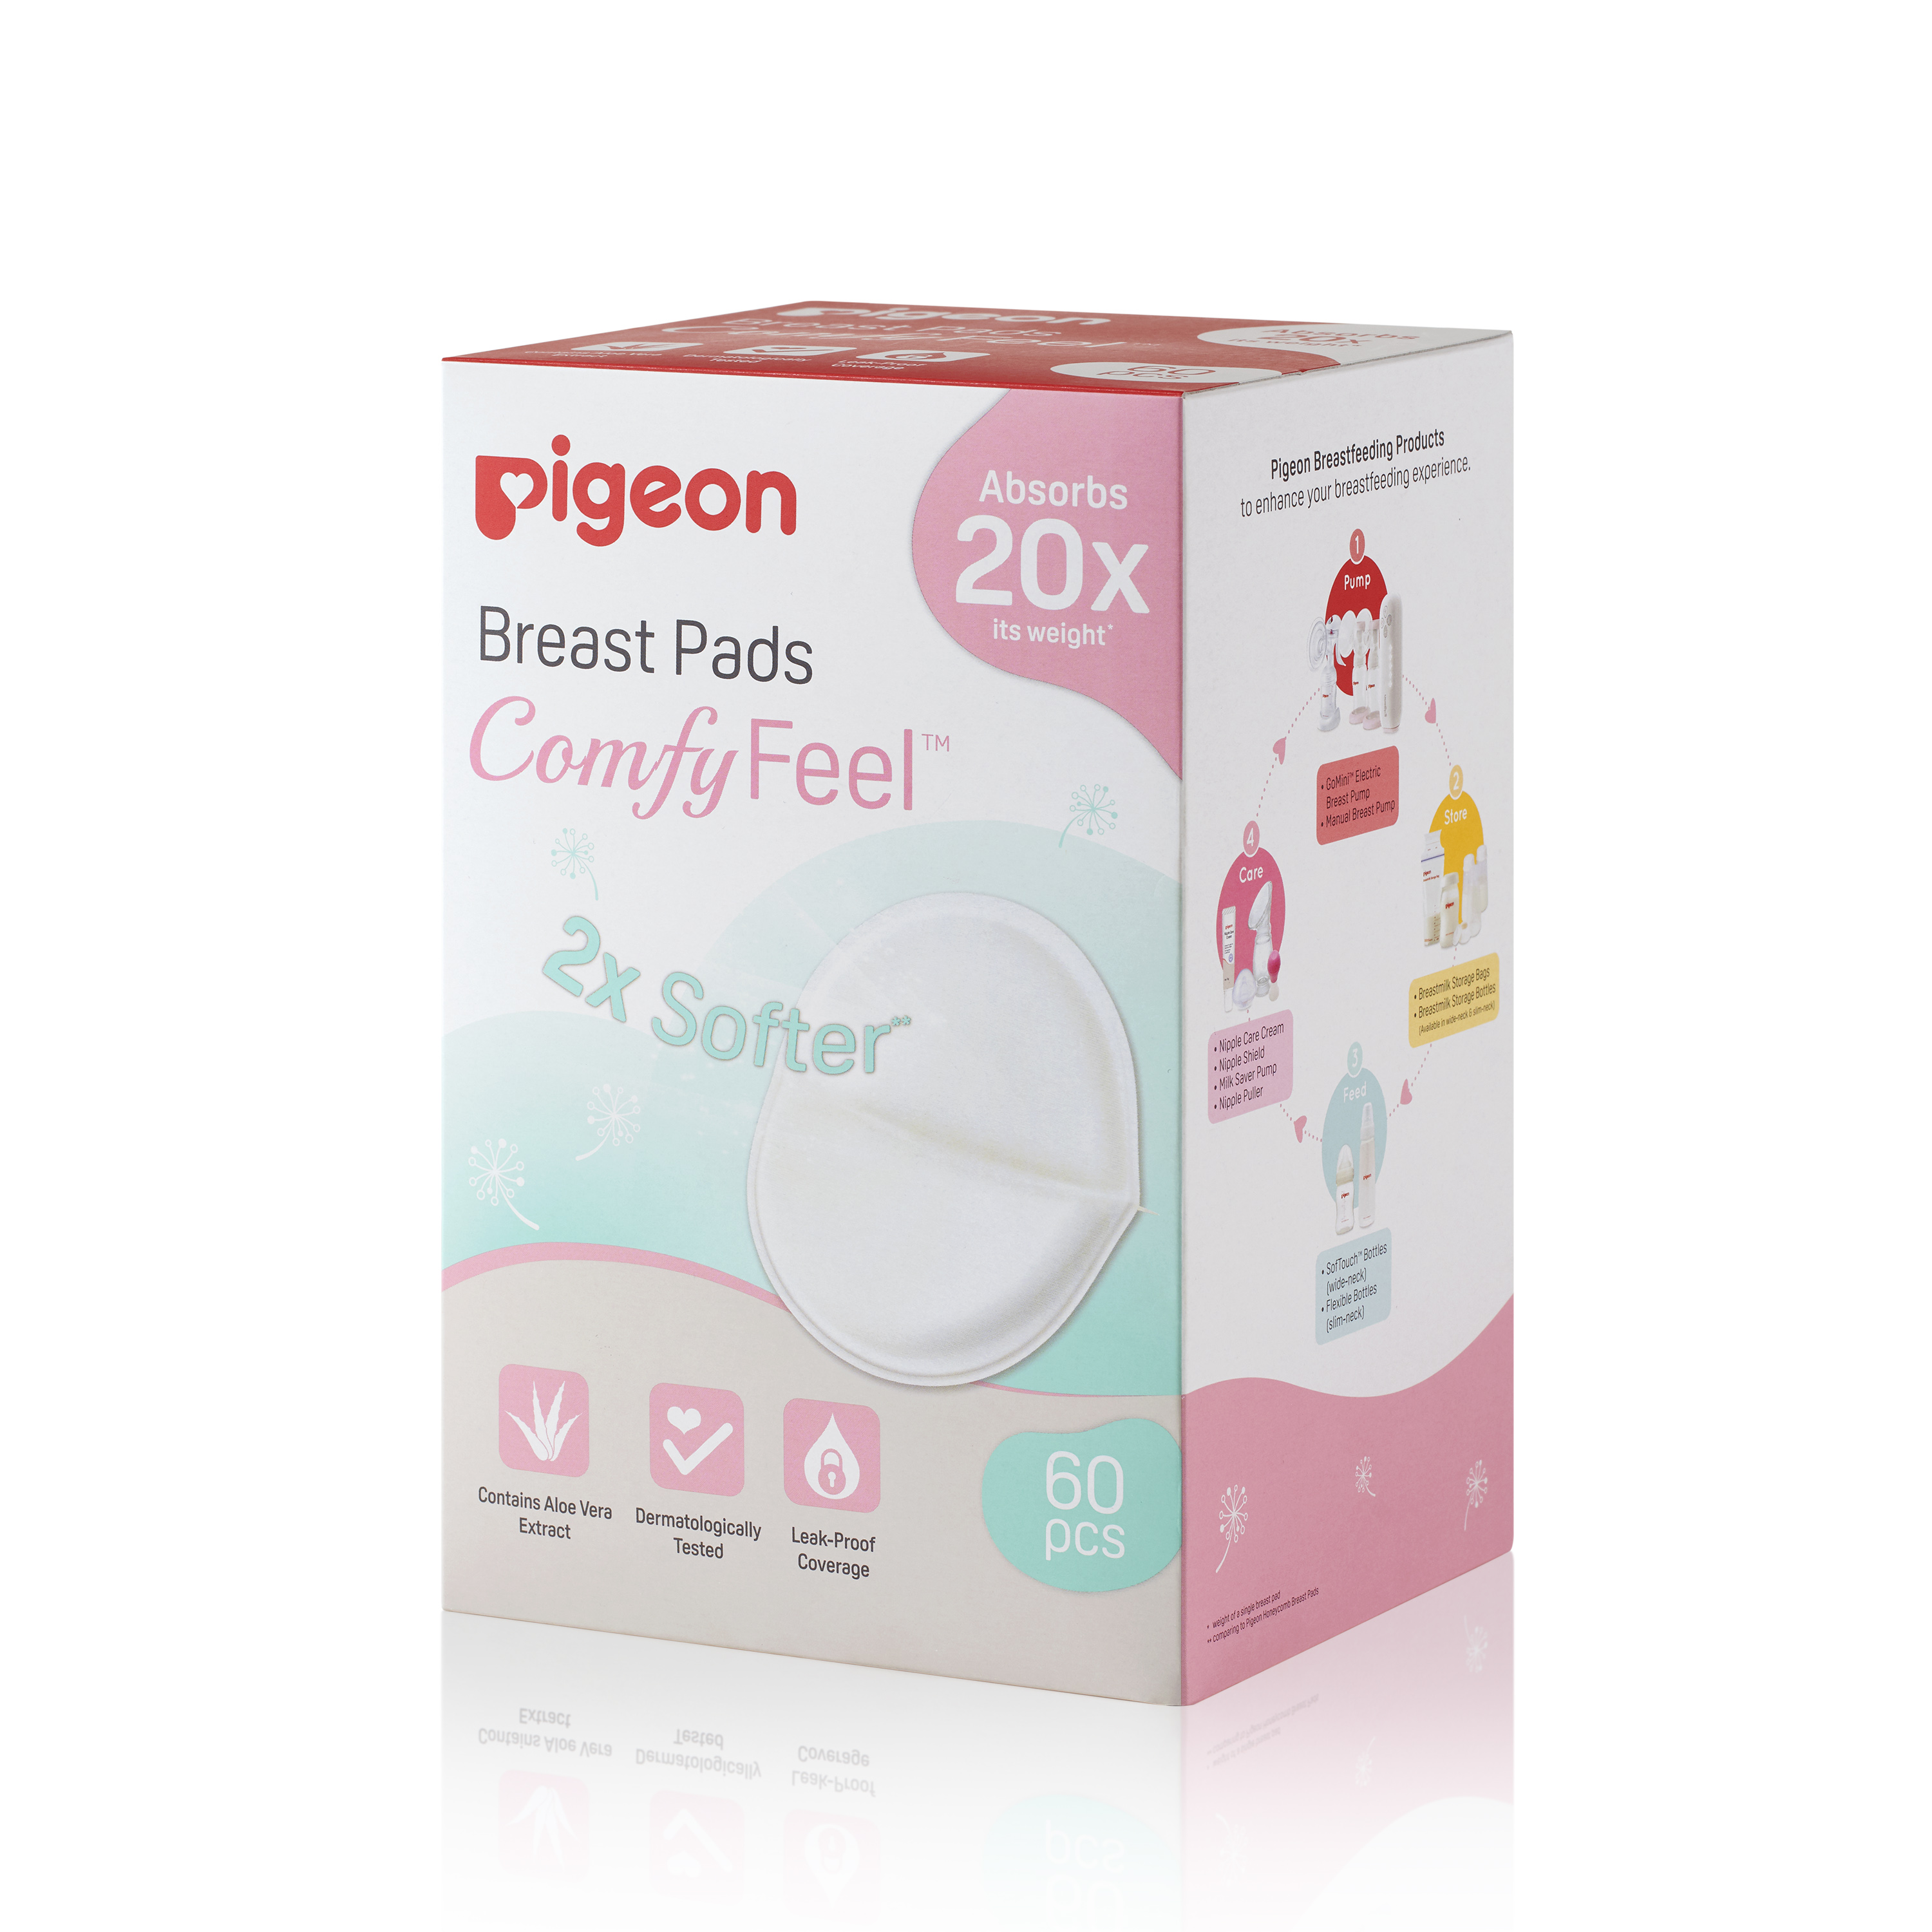 Baby Fair | Pigeon Breast Pads Comfyfeel 60Pcs Box (EN) with Shrink Wrap (Bundle of 2) (PG-79253K)